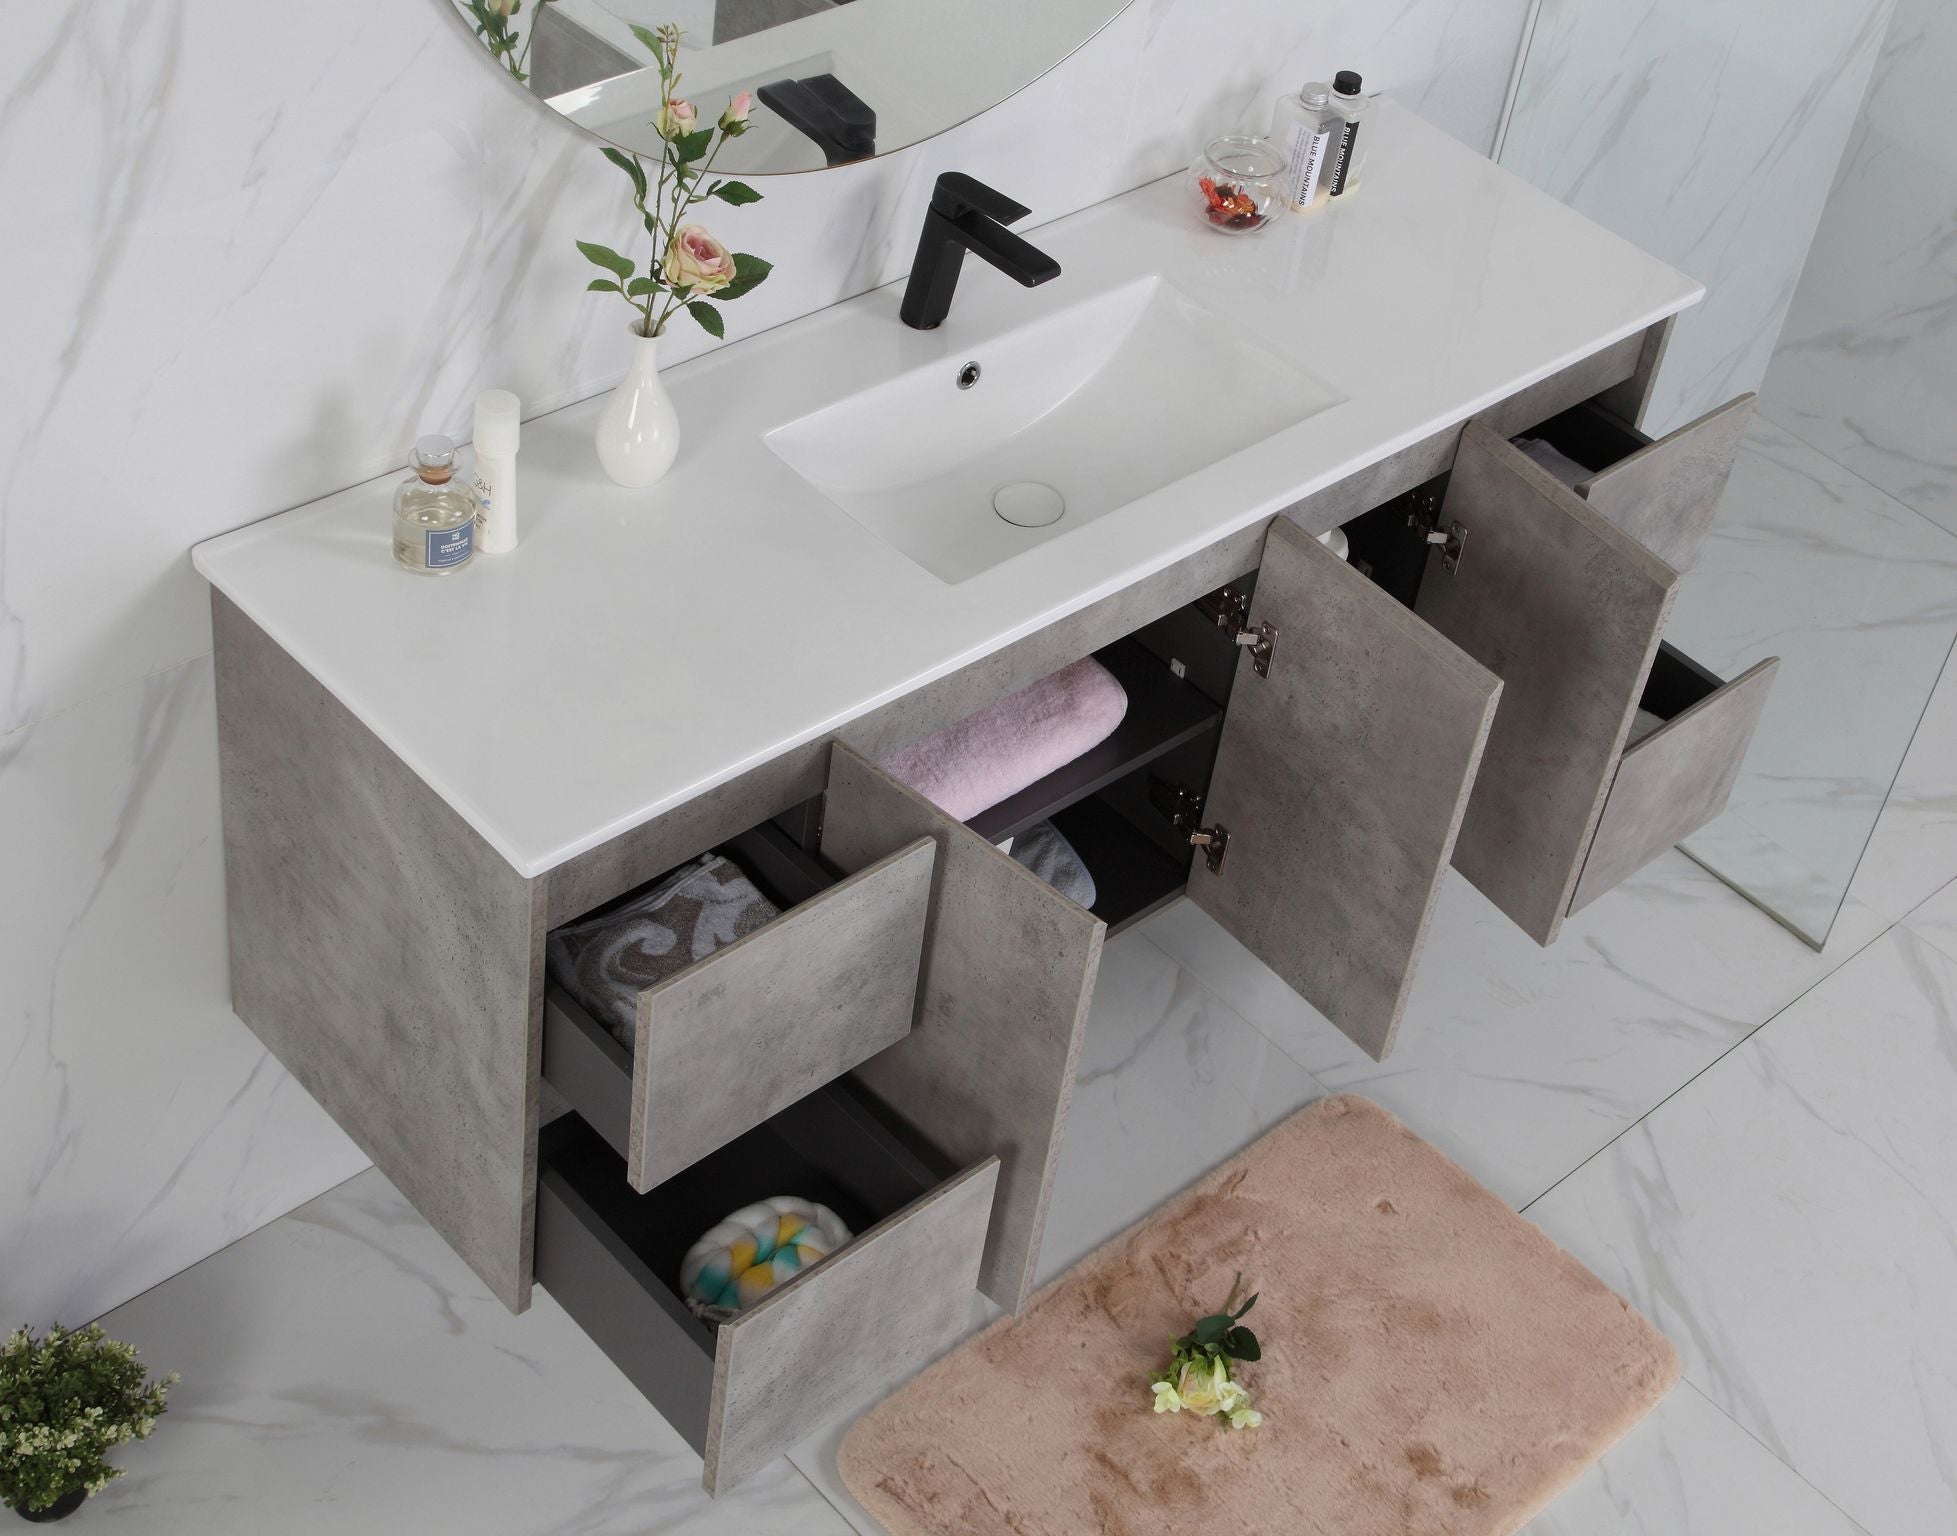 LOLA 1500mm Concrete Colour Wall Hung Bathroom Vanity - Single Basin